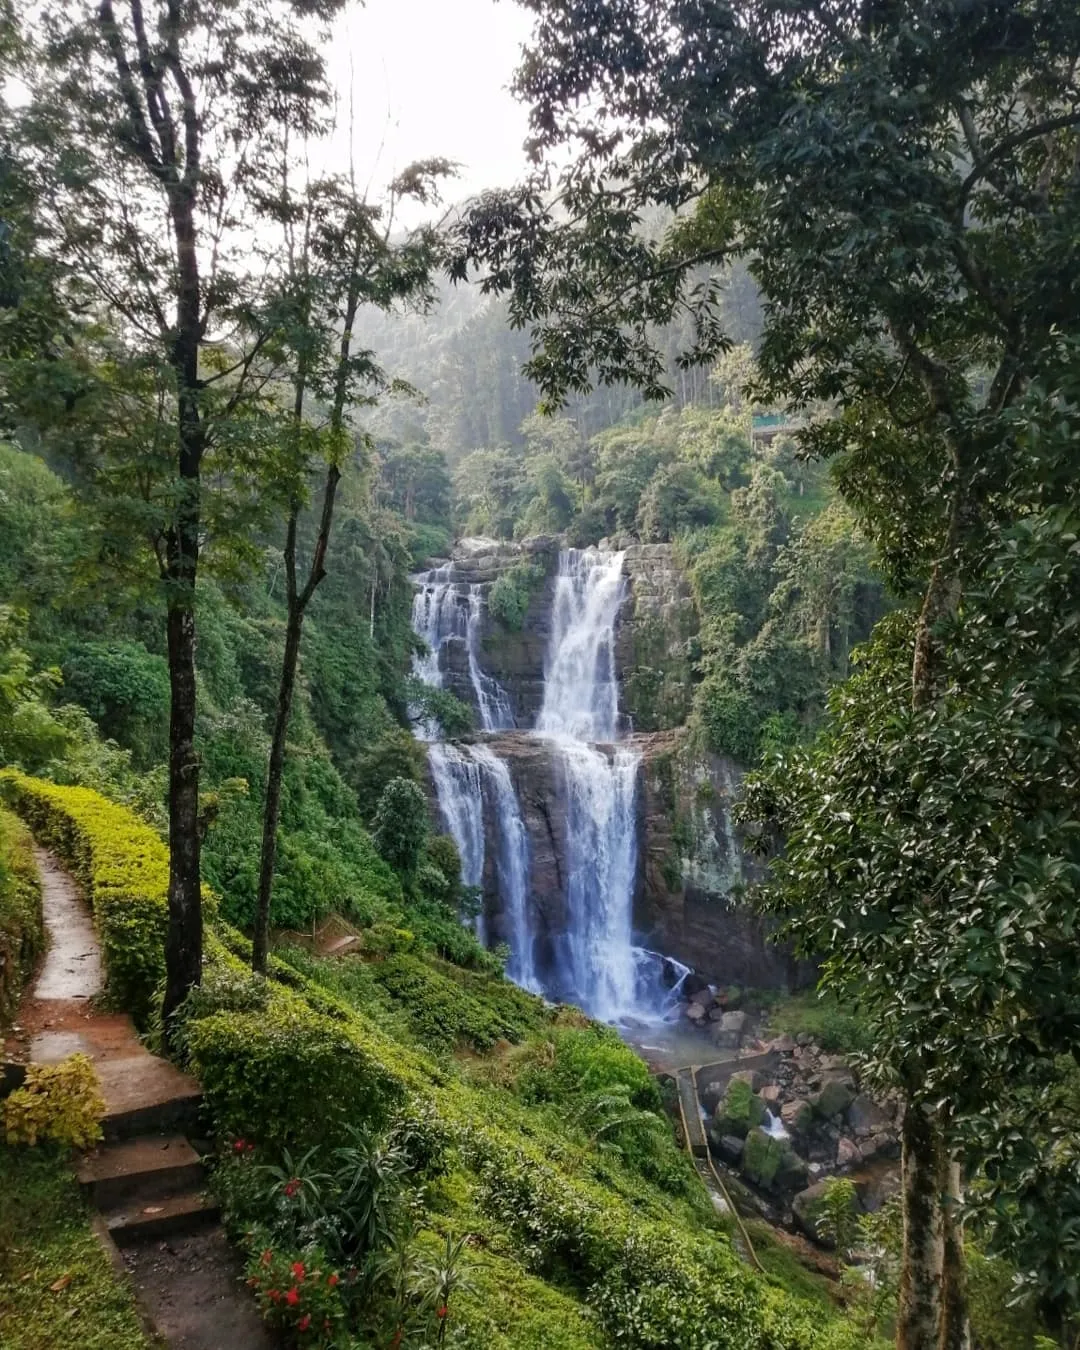 Best time to visit Ramboda Falls